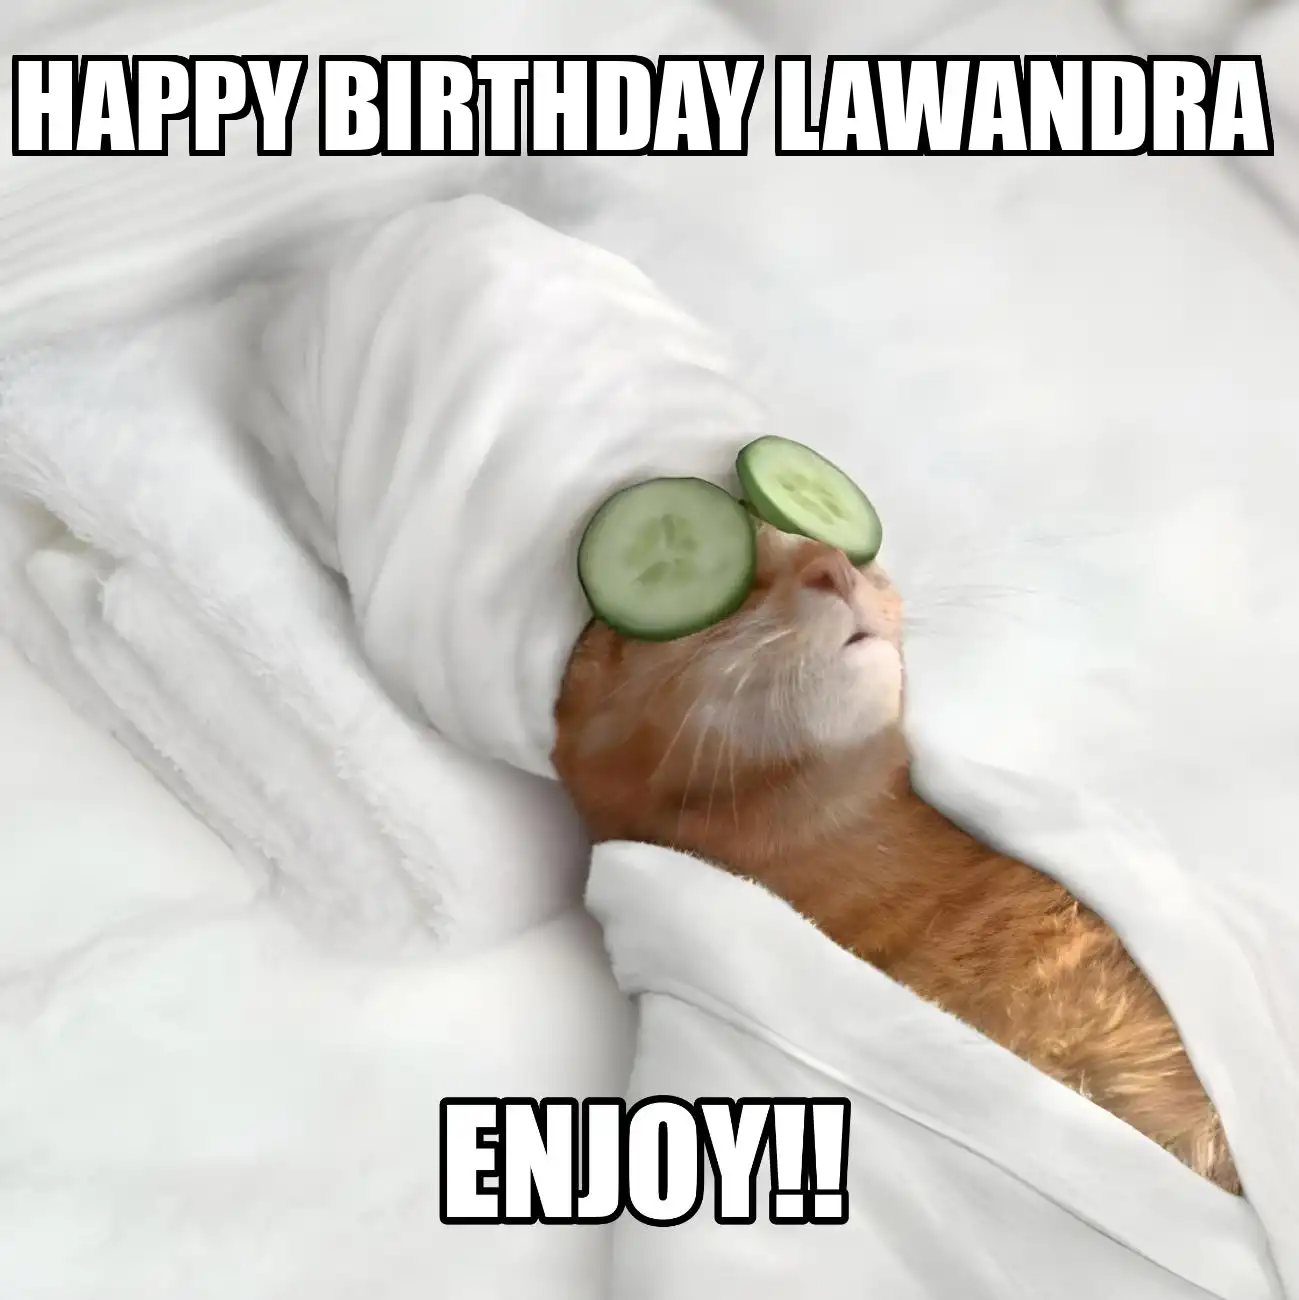 Happy Birthday Lawandra Enjoy Cat Meme